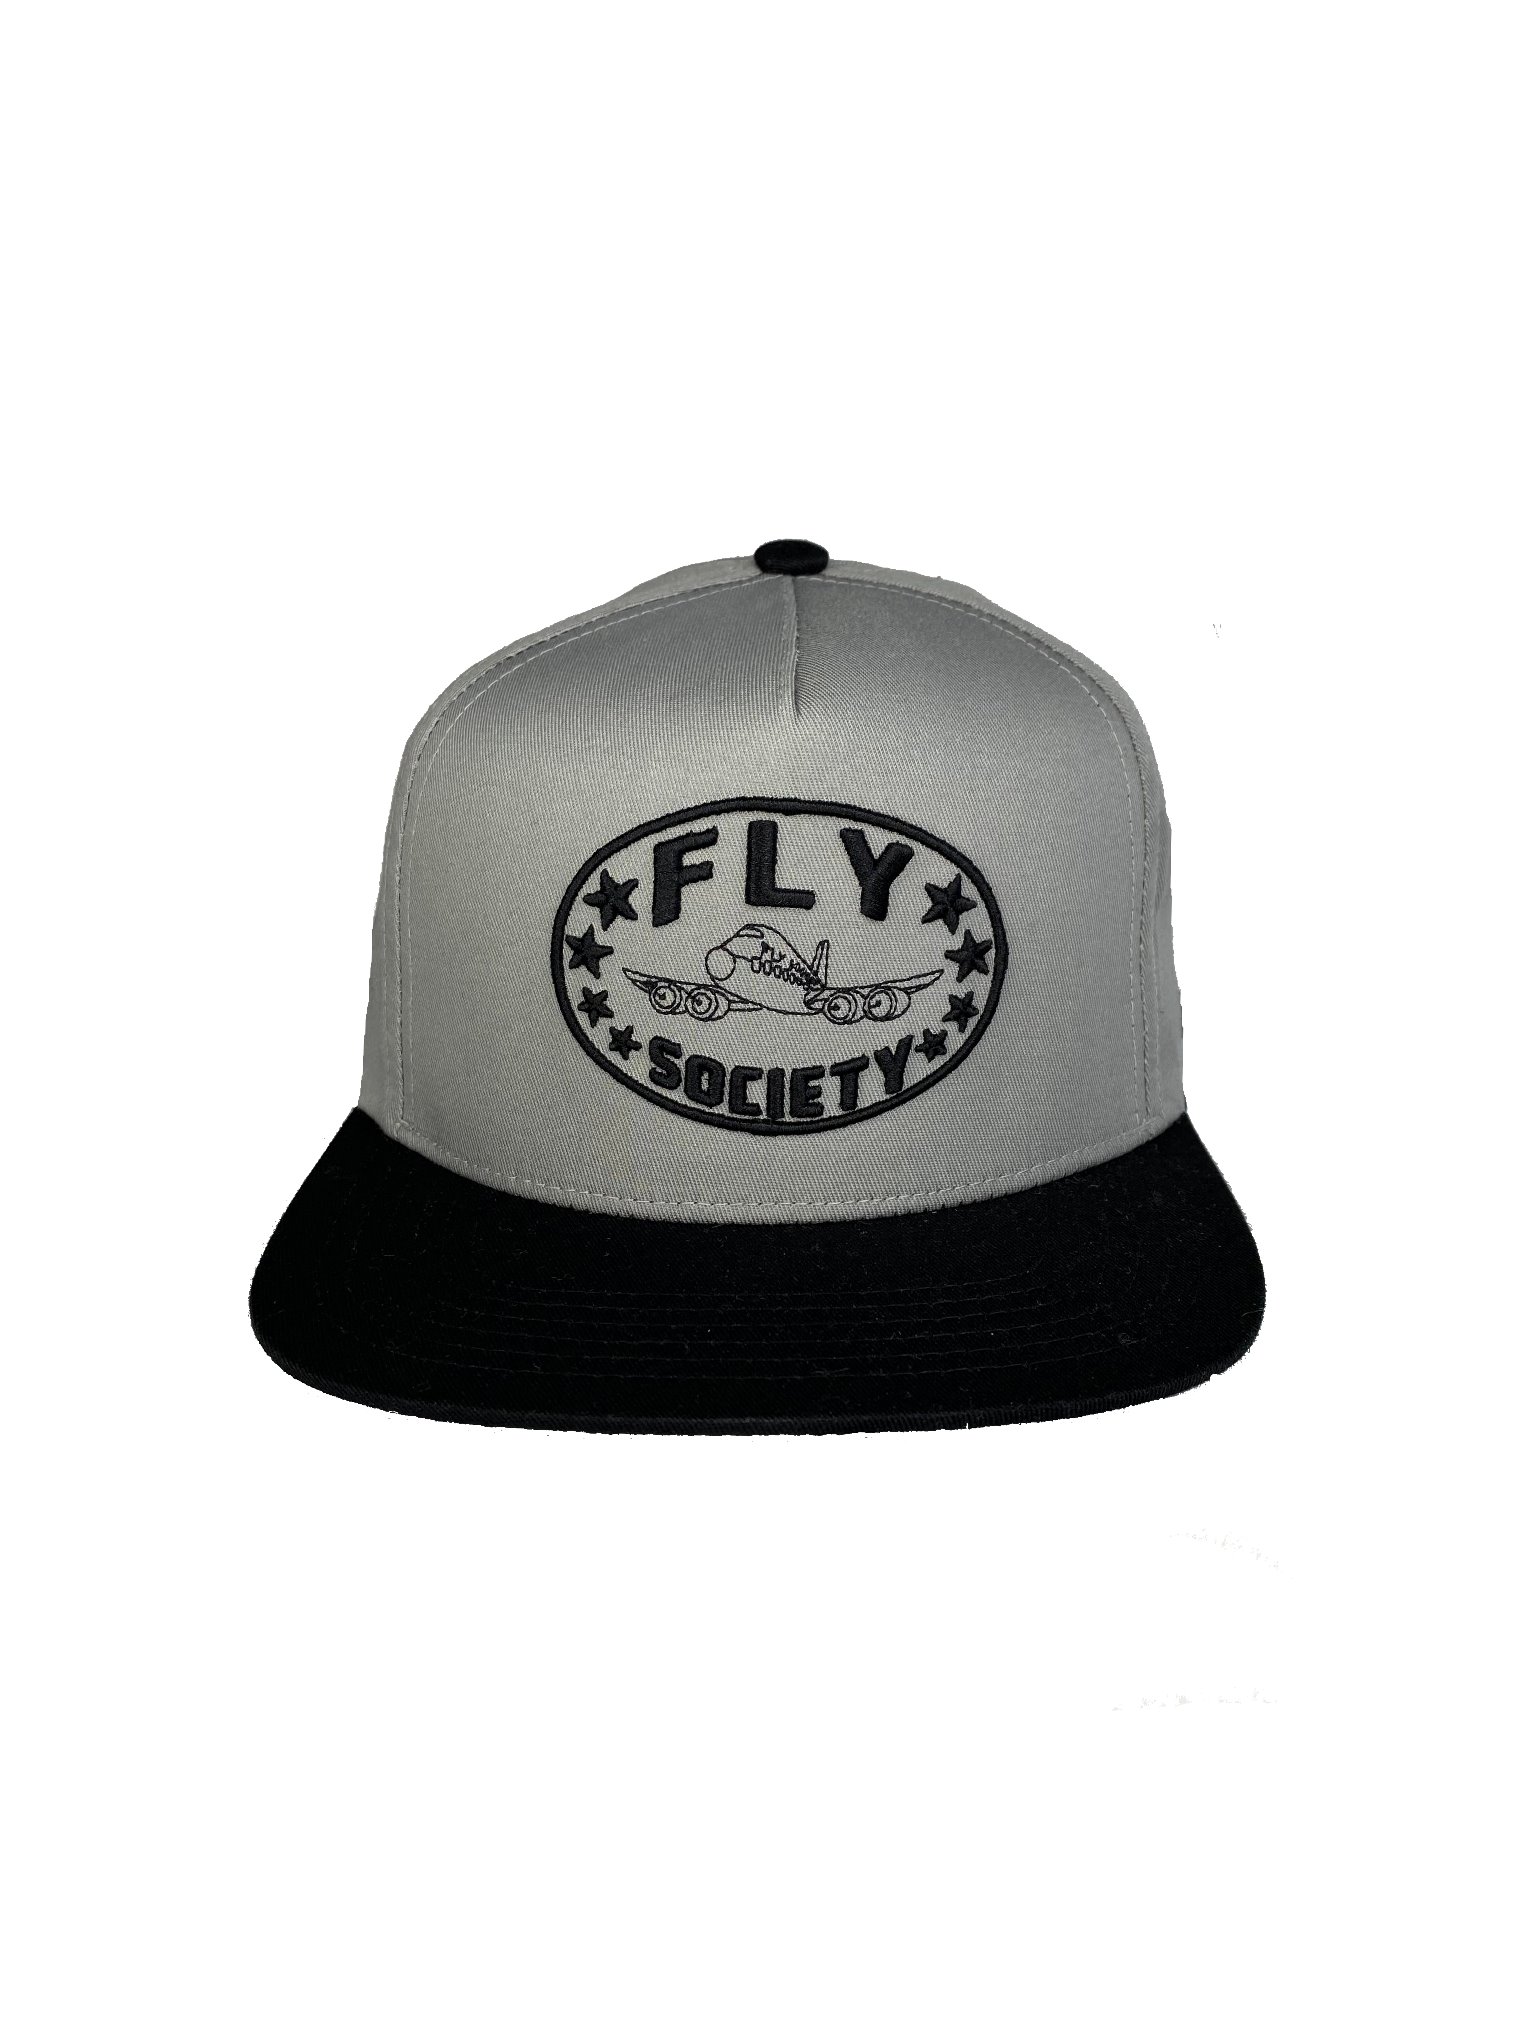 Fly Society Snapback Cap / Color: Grey/Black - SCOTTEEZ URBAN